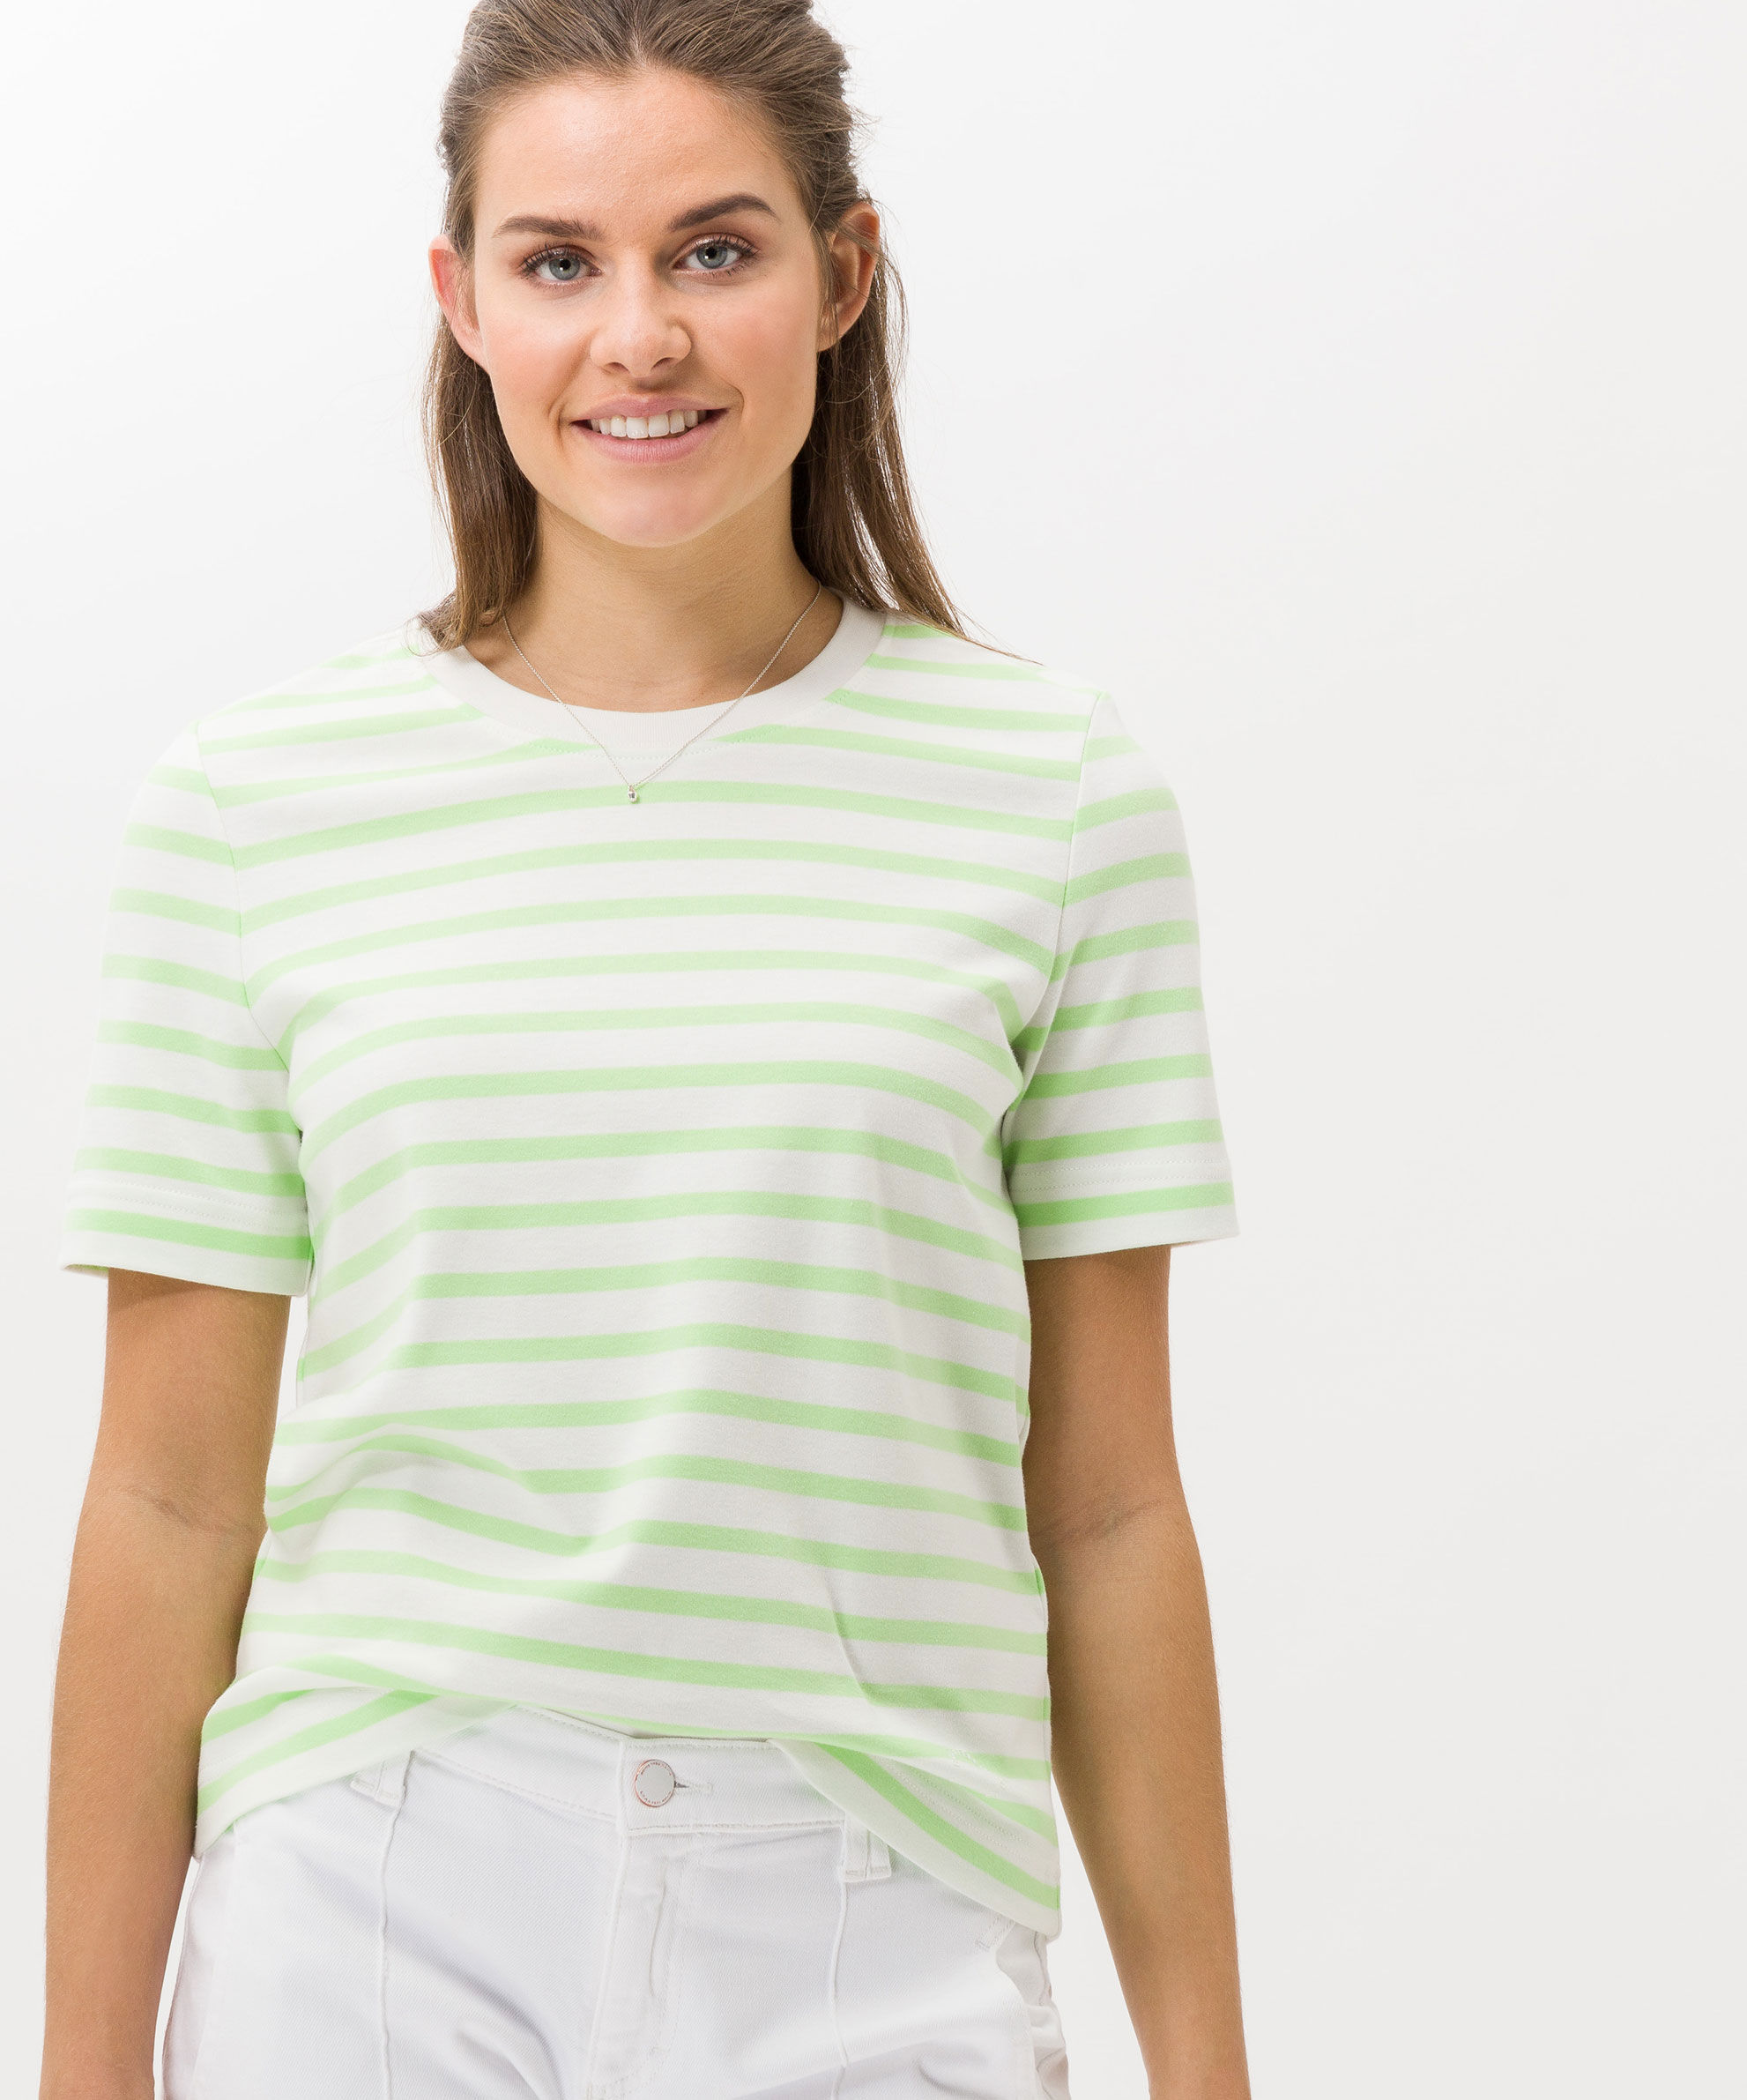 Mode women Shop Shirt - BRAX Cira in Style Hartmann Streifenoptik